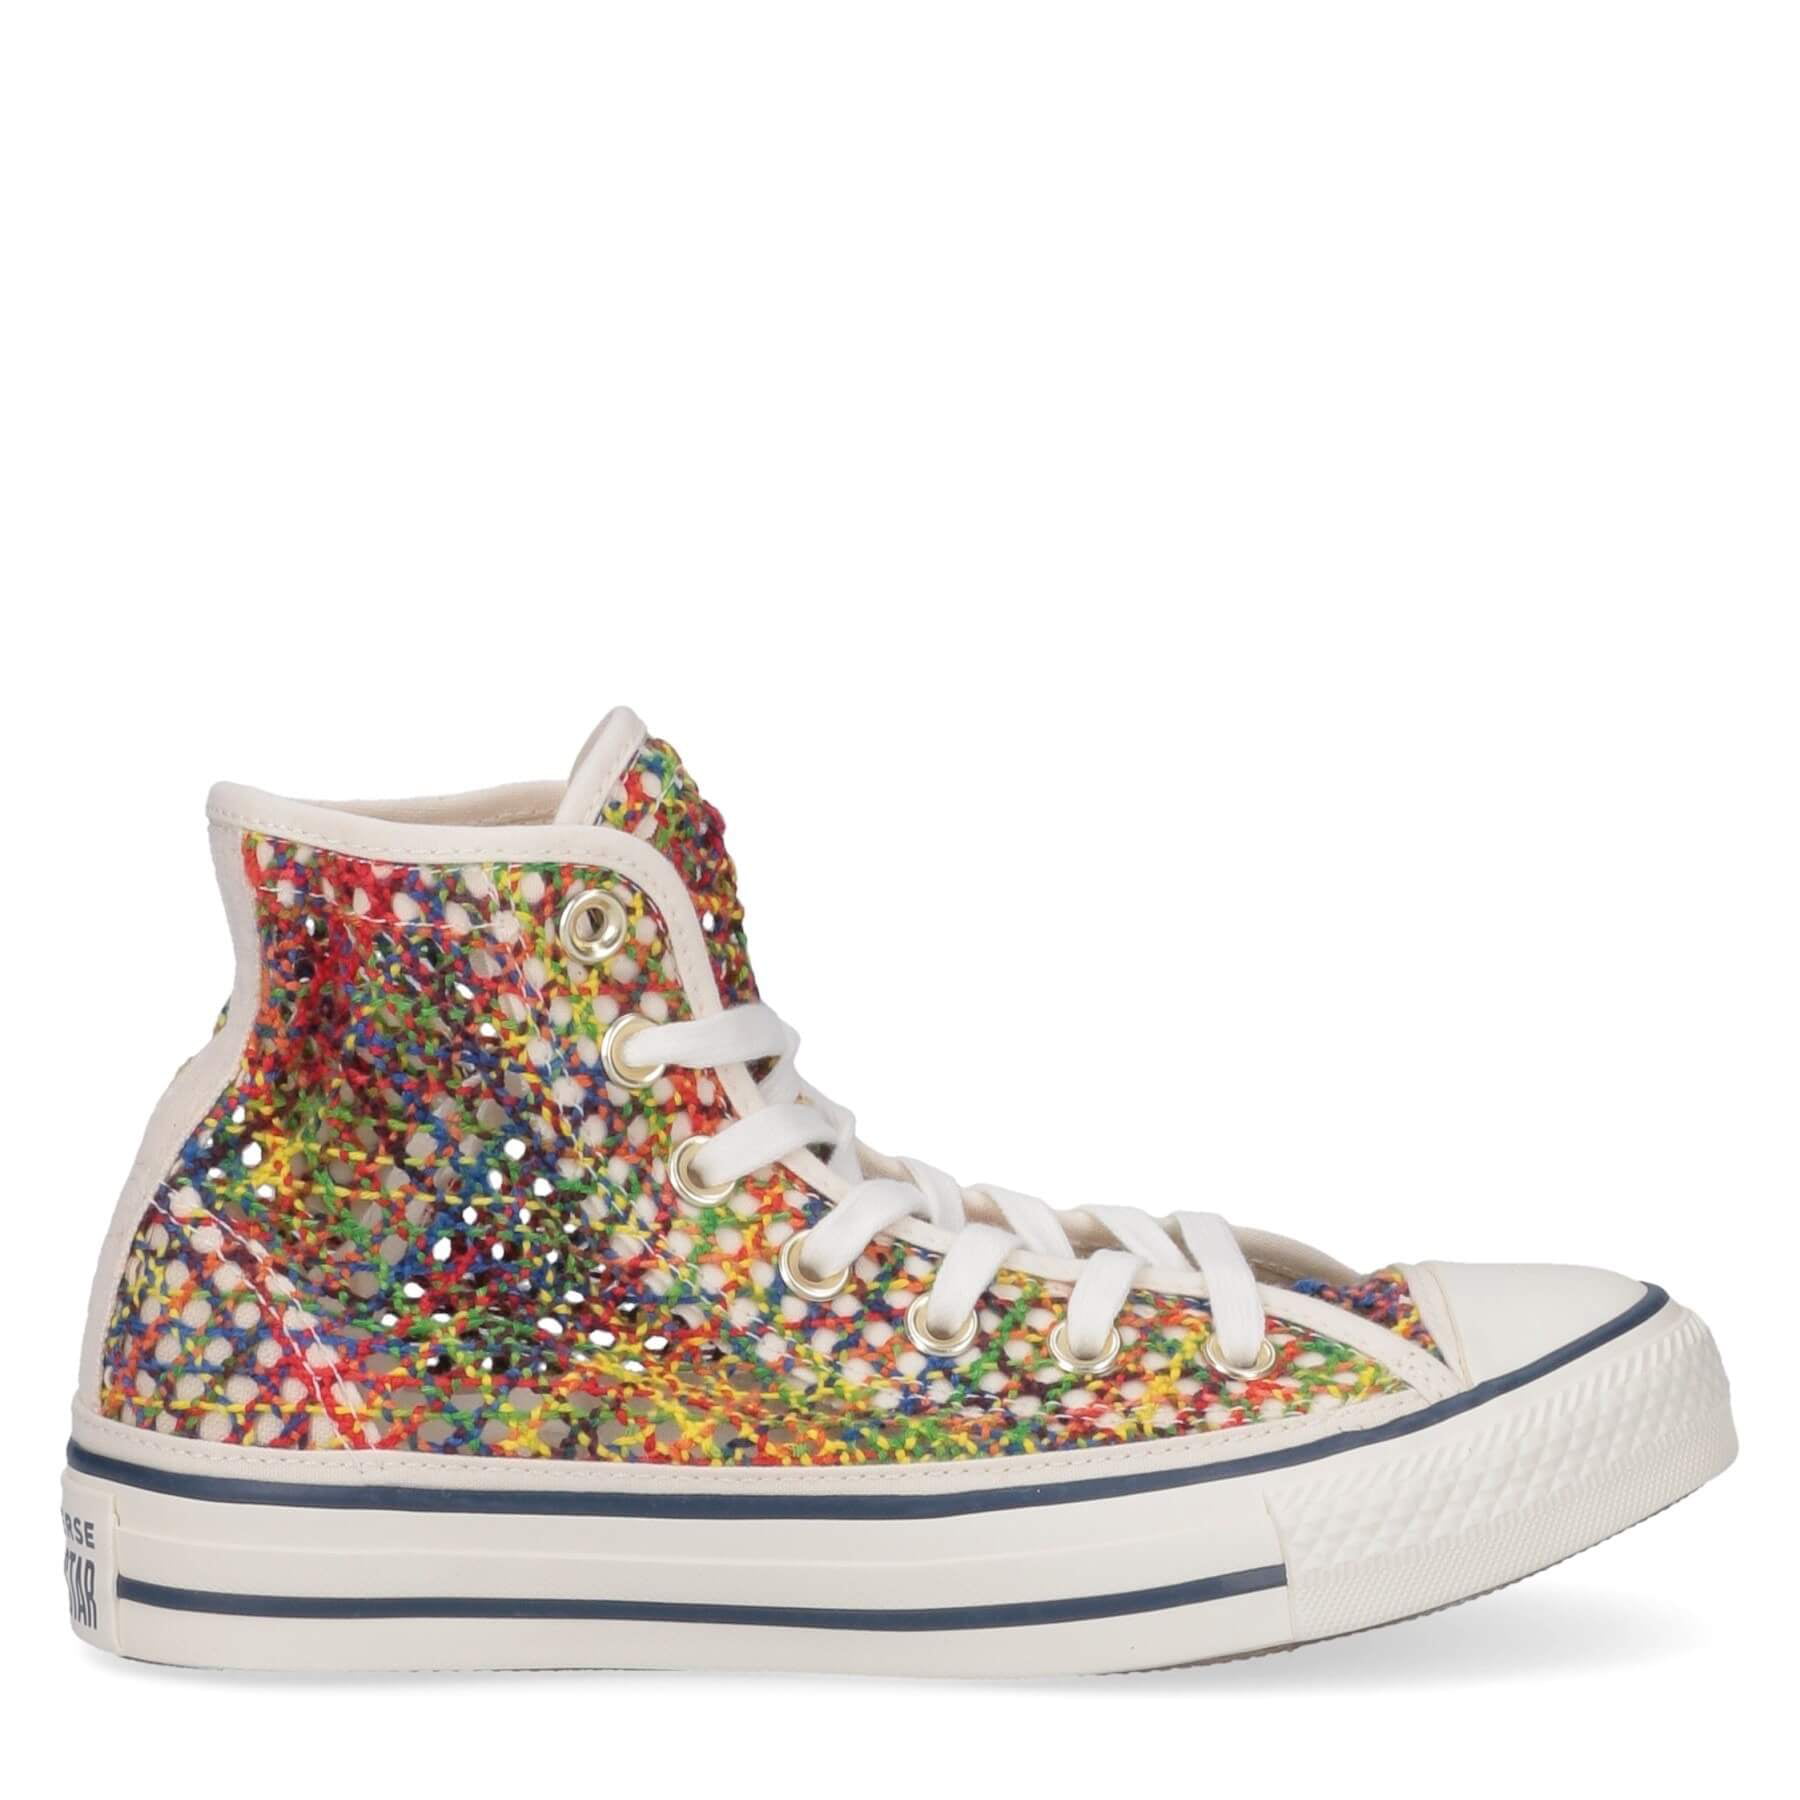 Converse Chuck Taylor All Star Ladies Multicolor Knit Sneakers 9 - Walmart.com